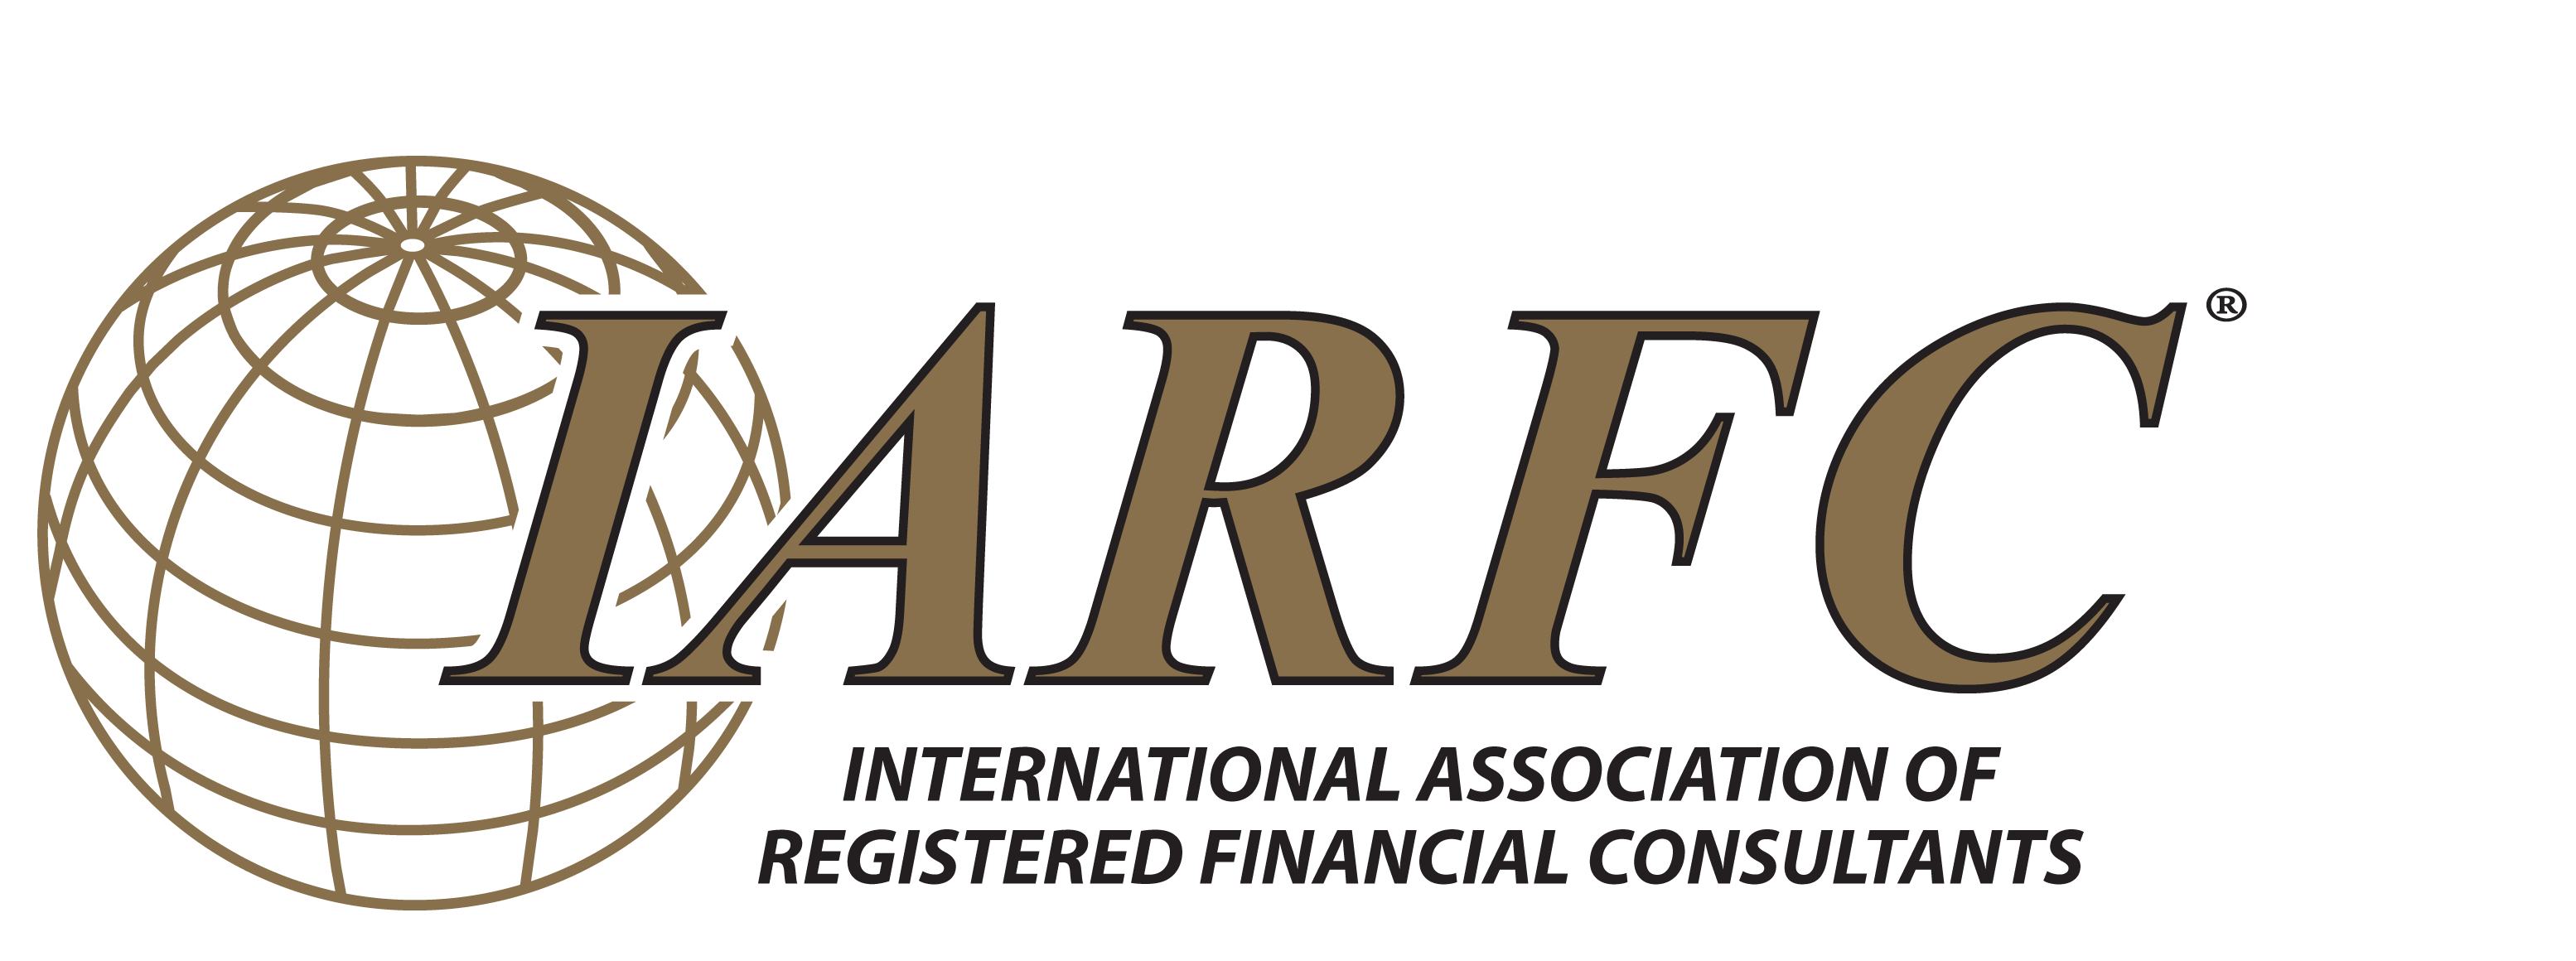 International Association of Registered Financial Associates